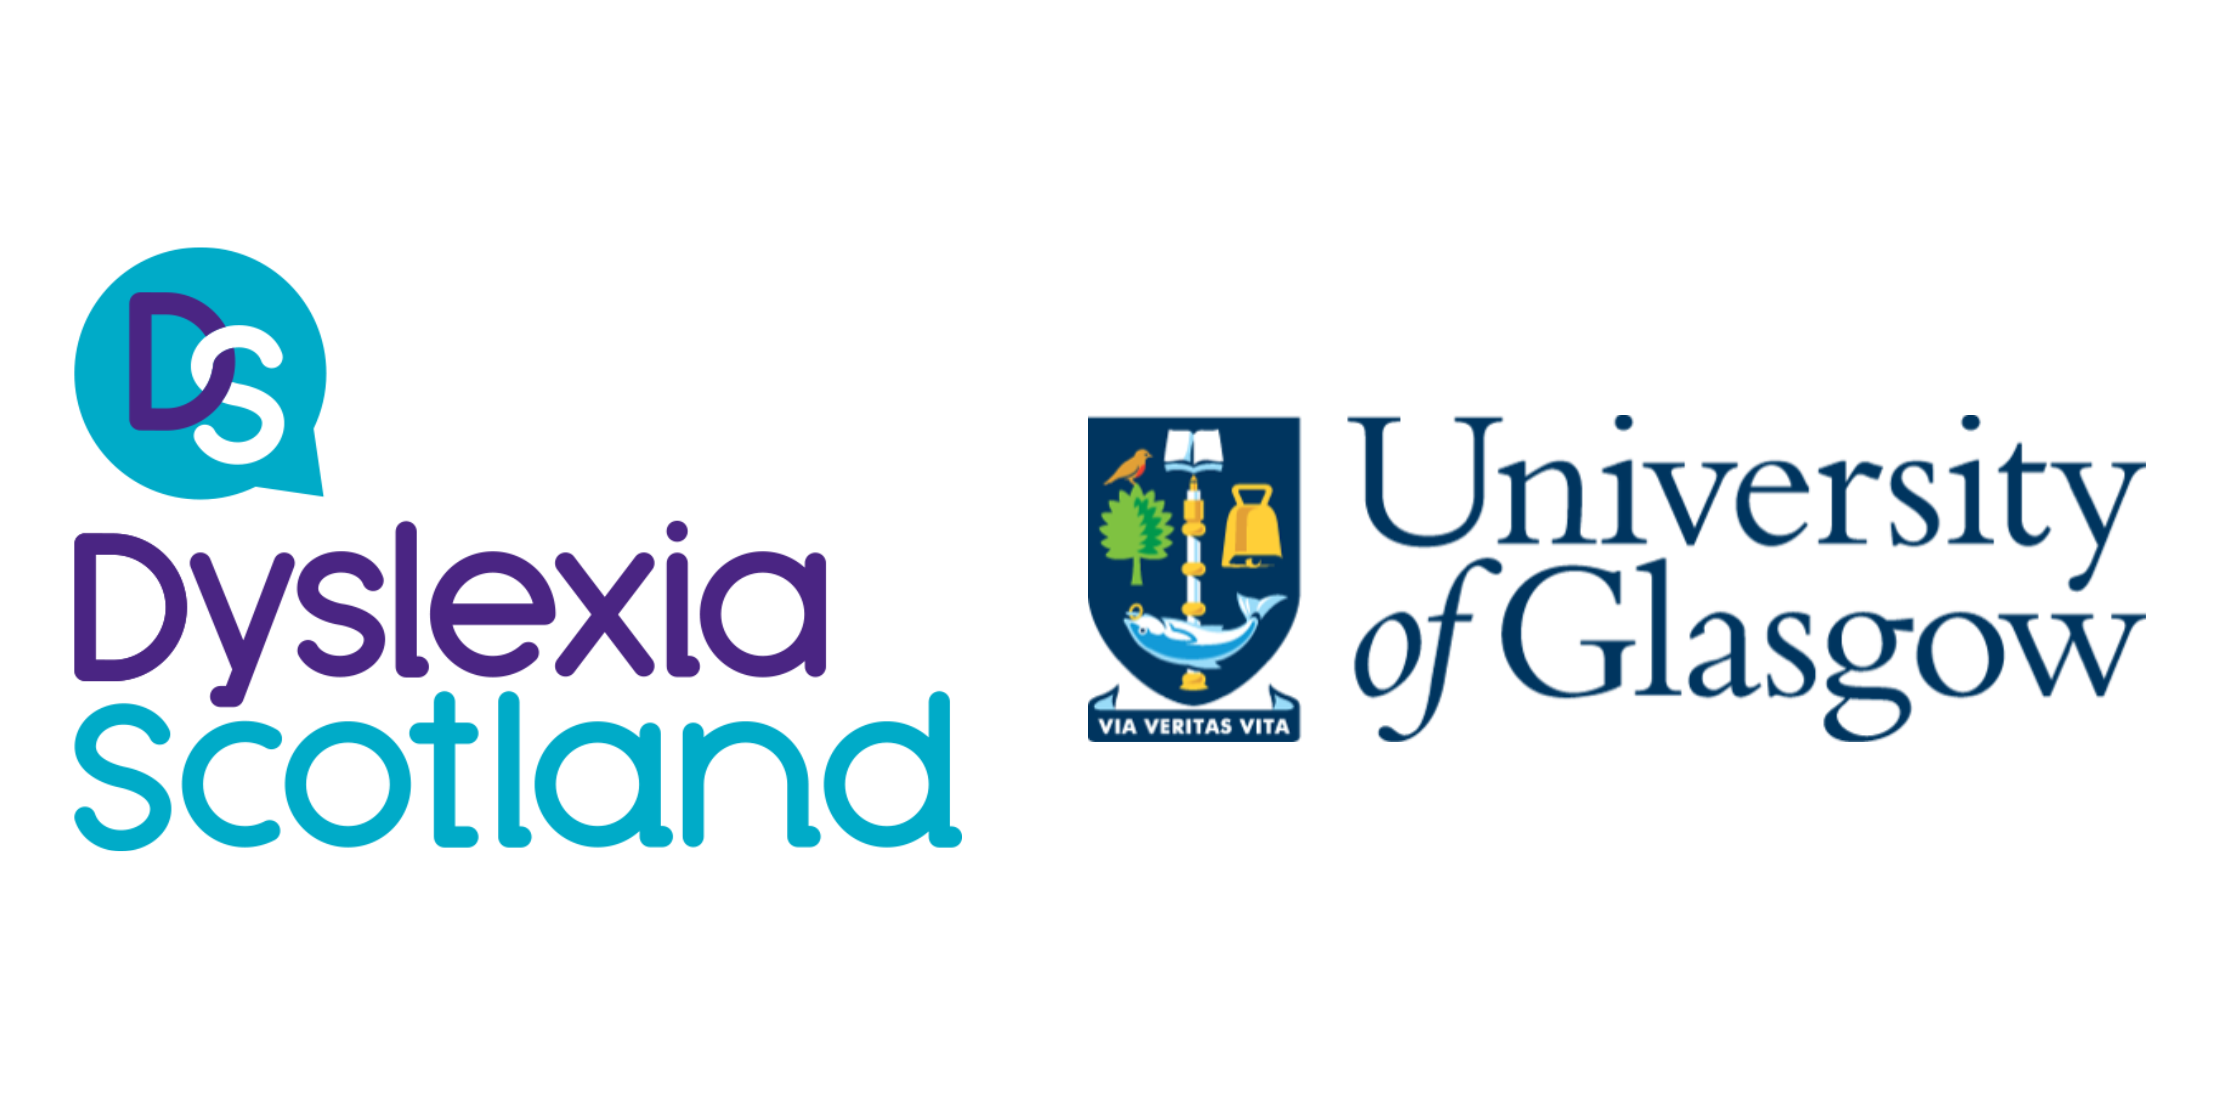 University of GLasgow logo alongside Dyslexia Scotland's.